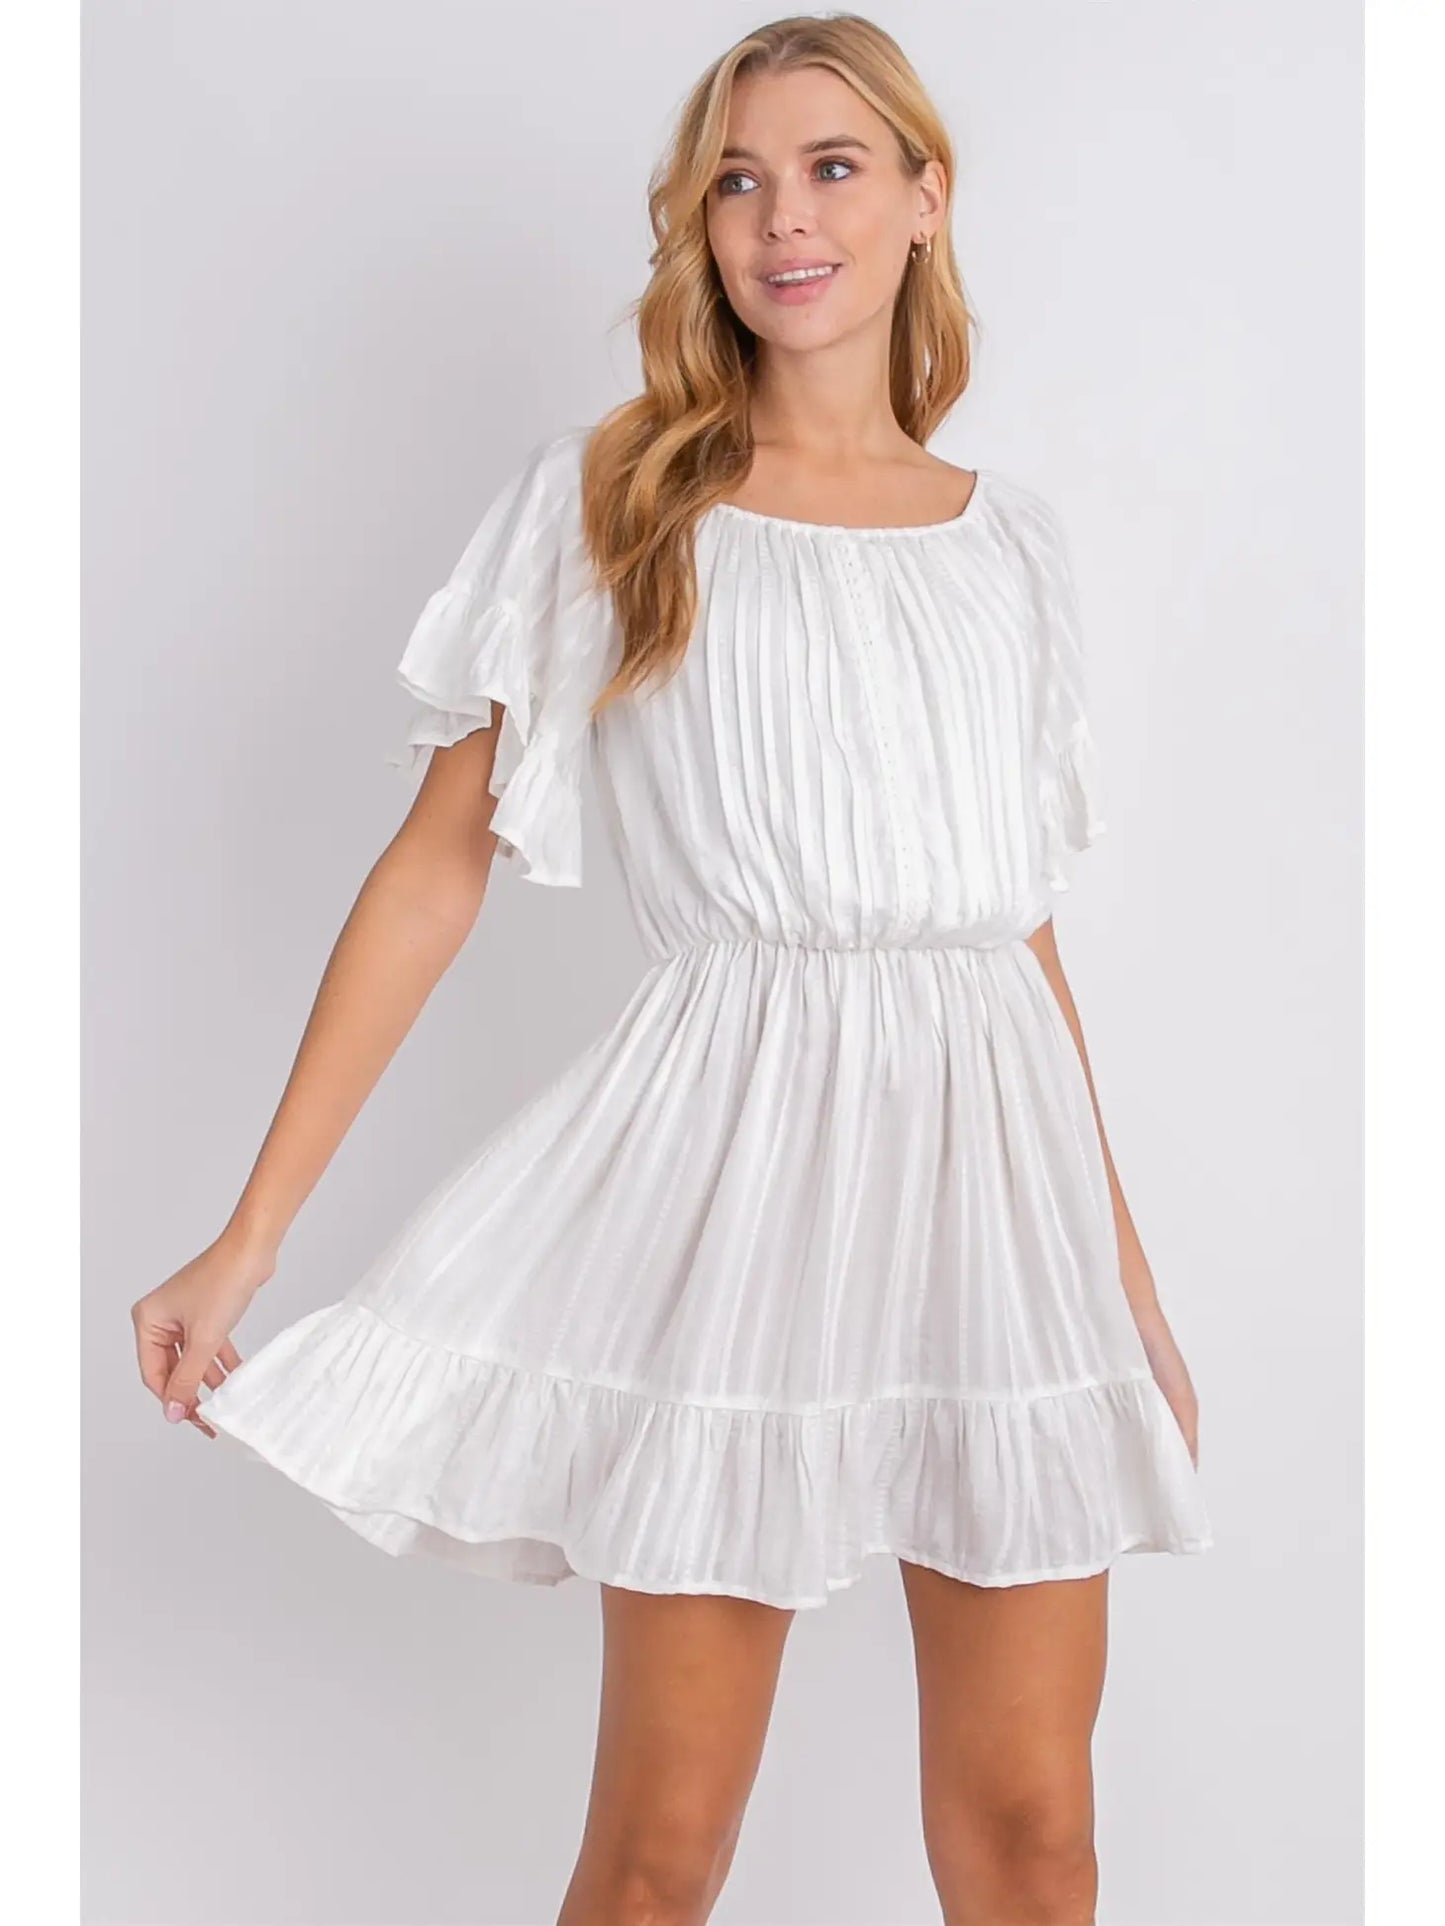 Blouson Textered Dress